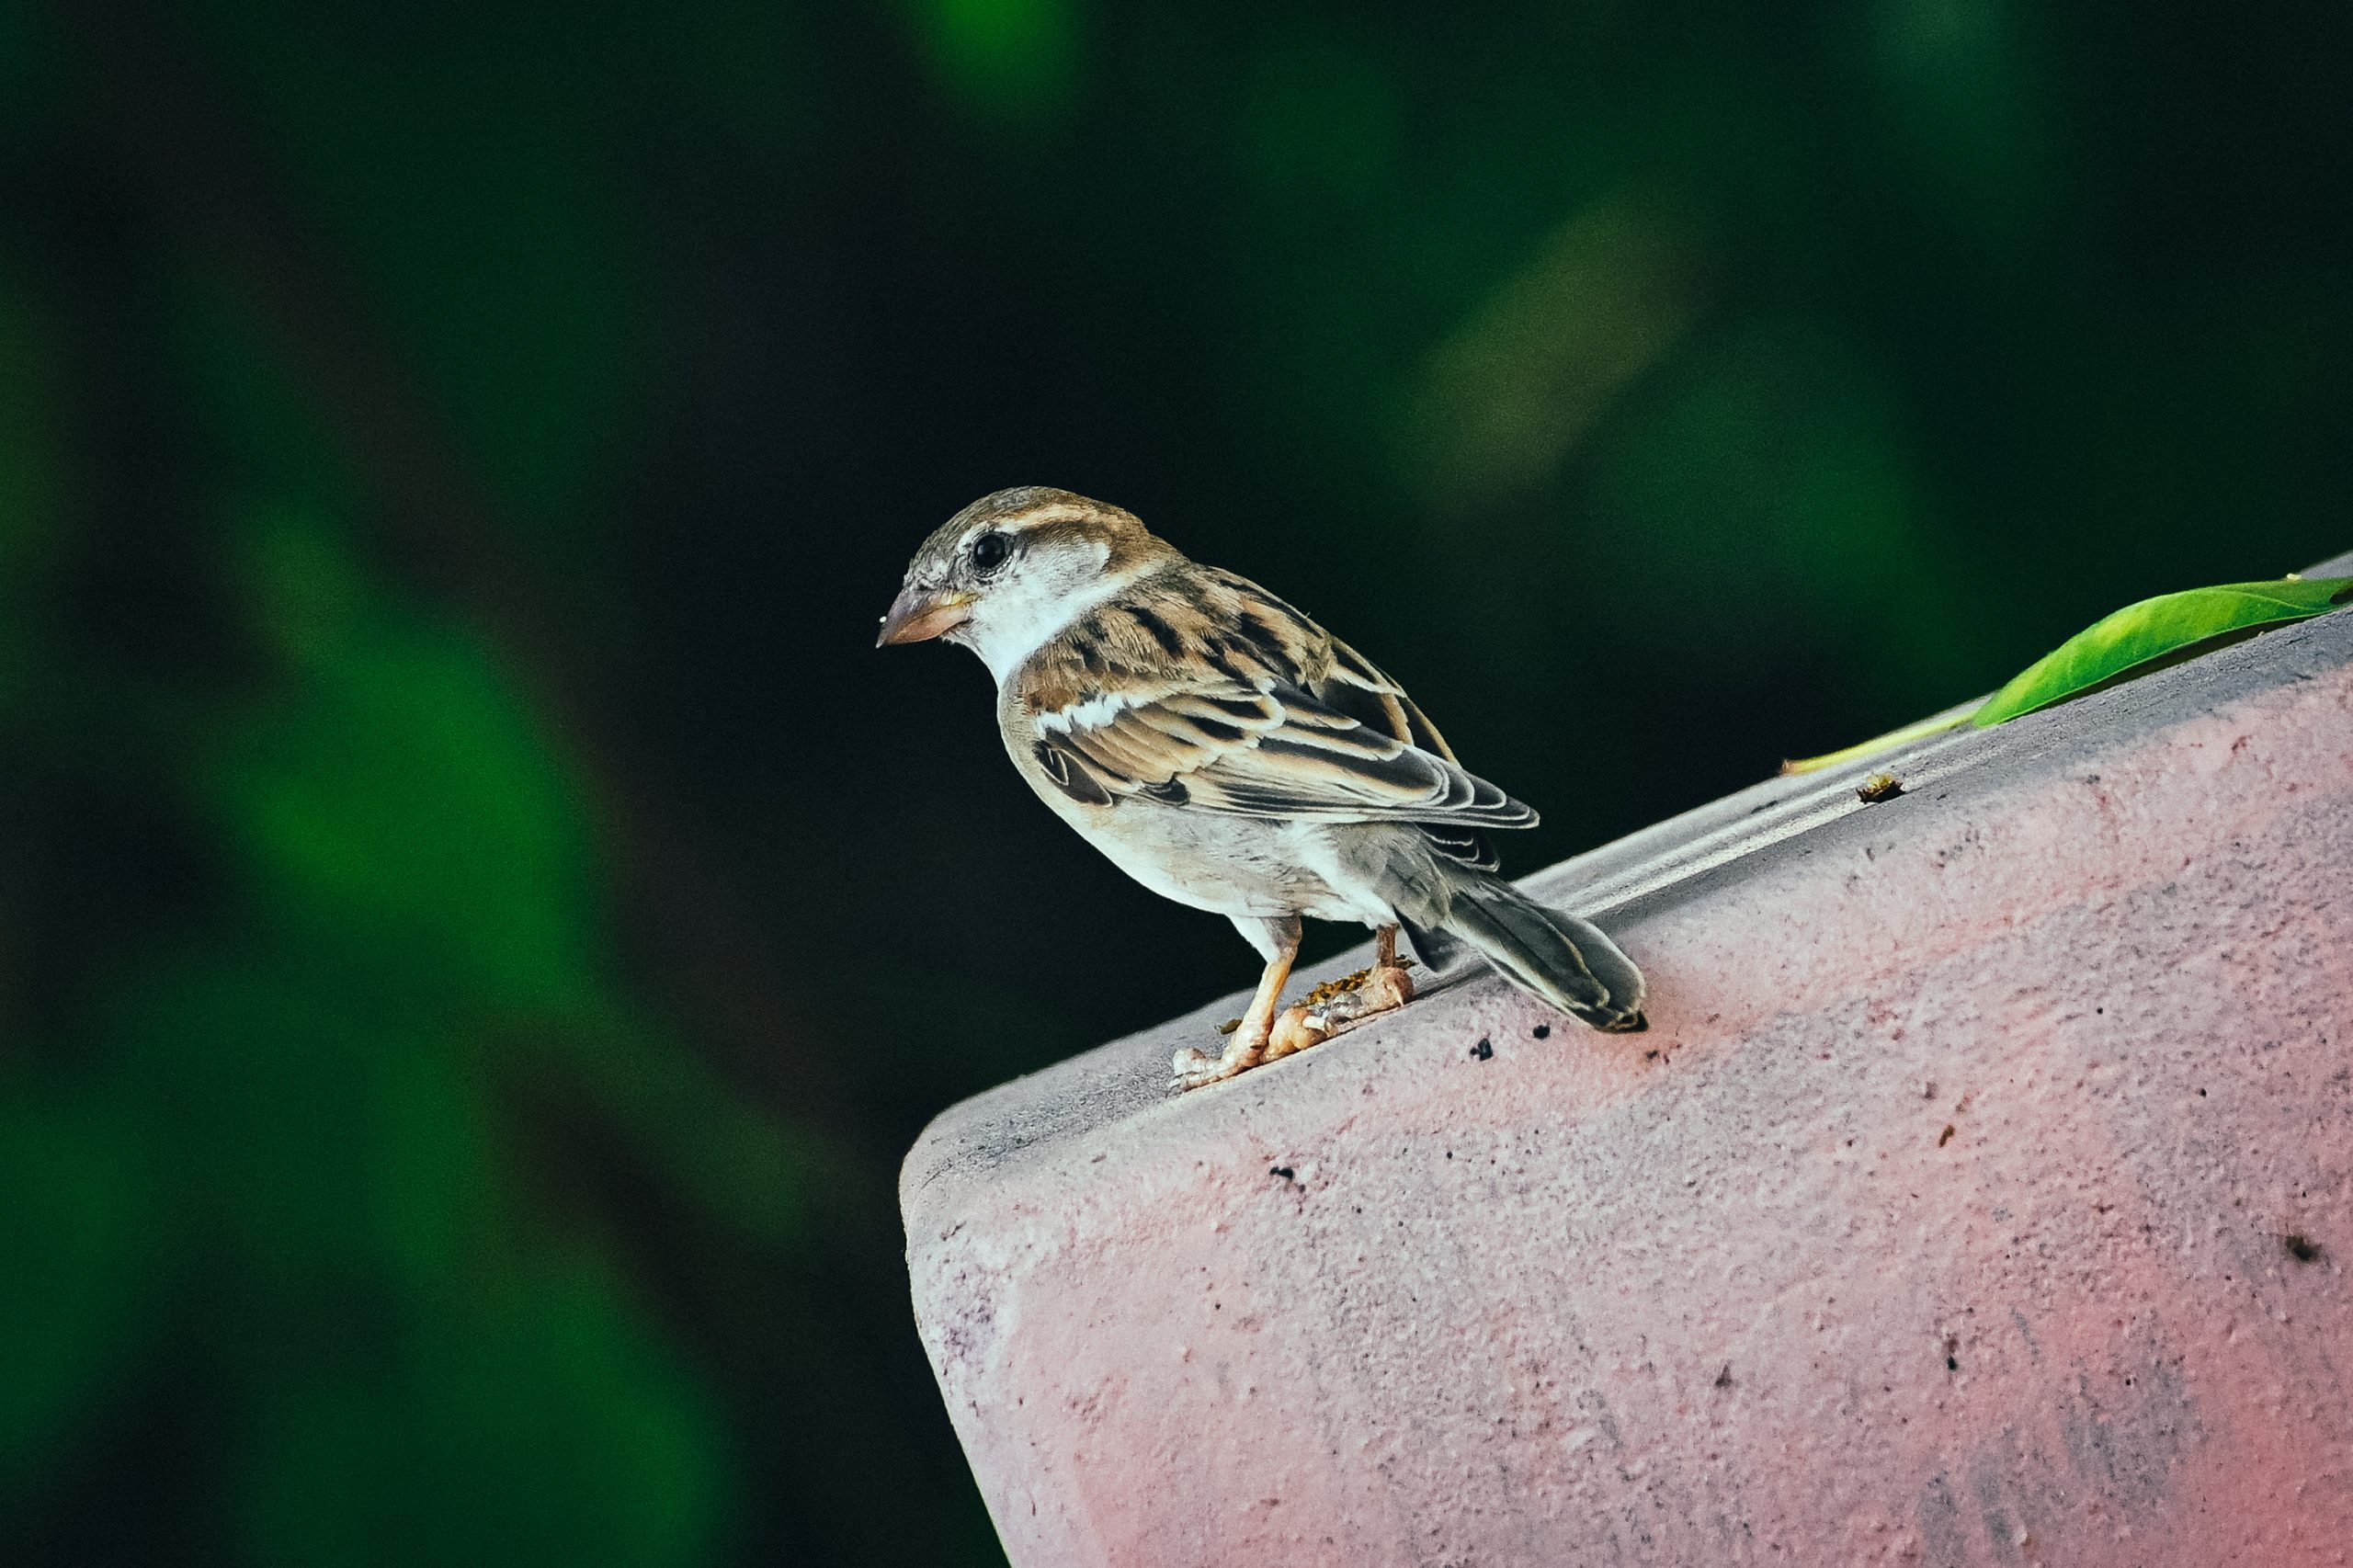 An Indian sparrow